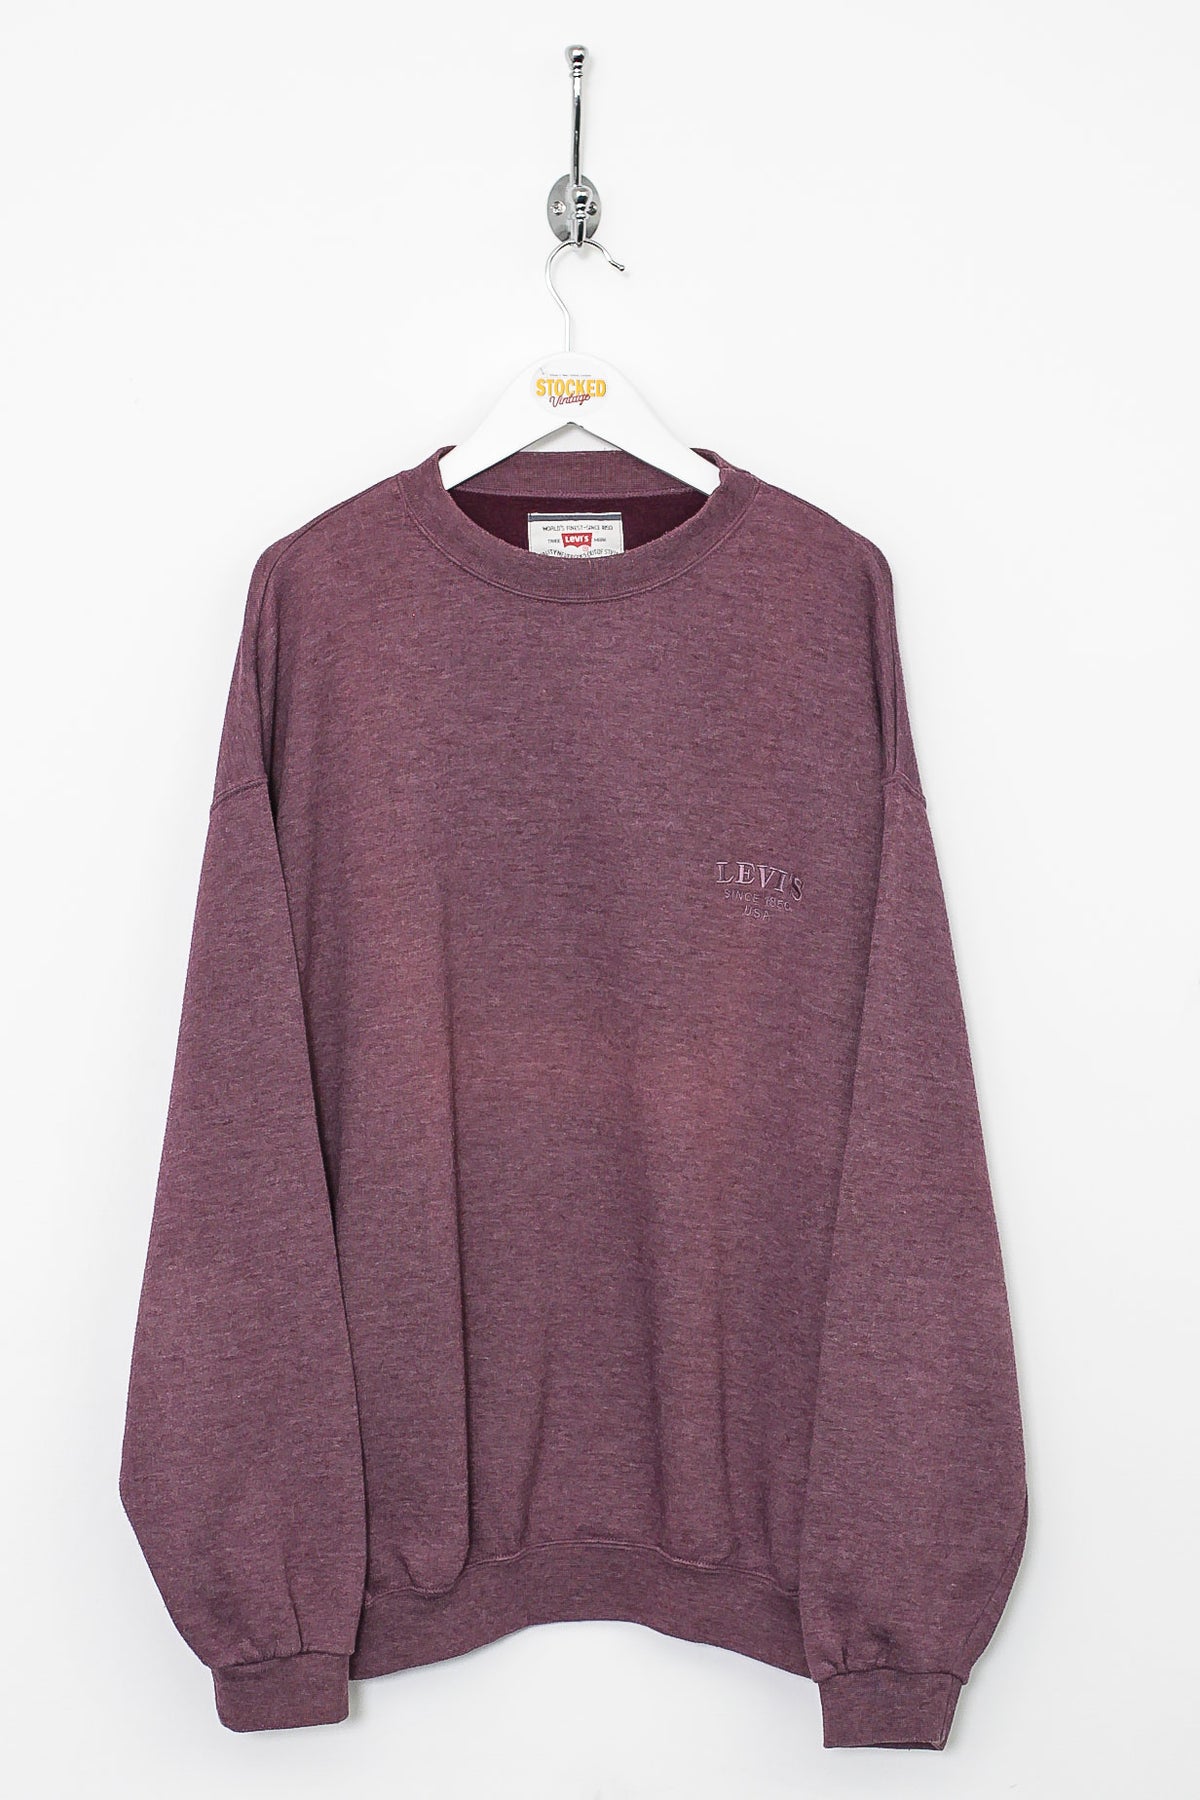 00s Levi's Sweatshirt (XL)